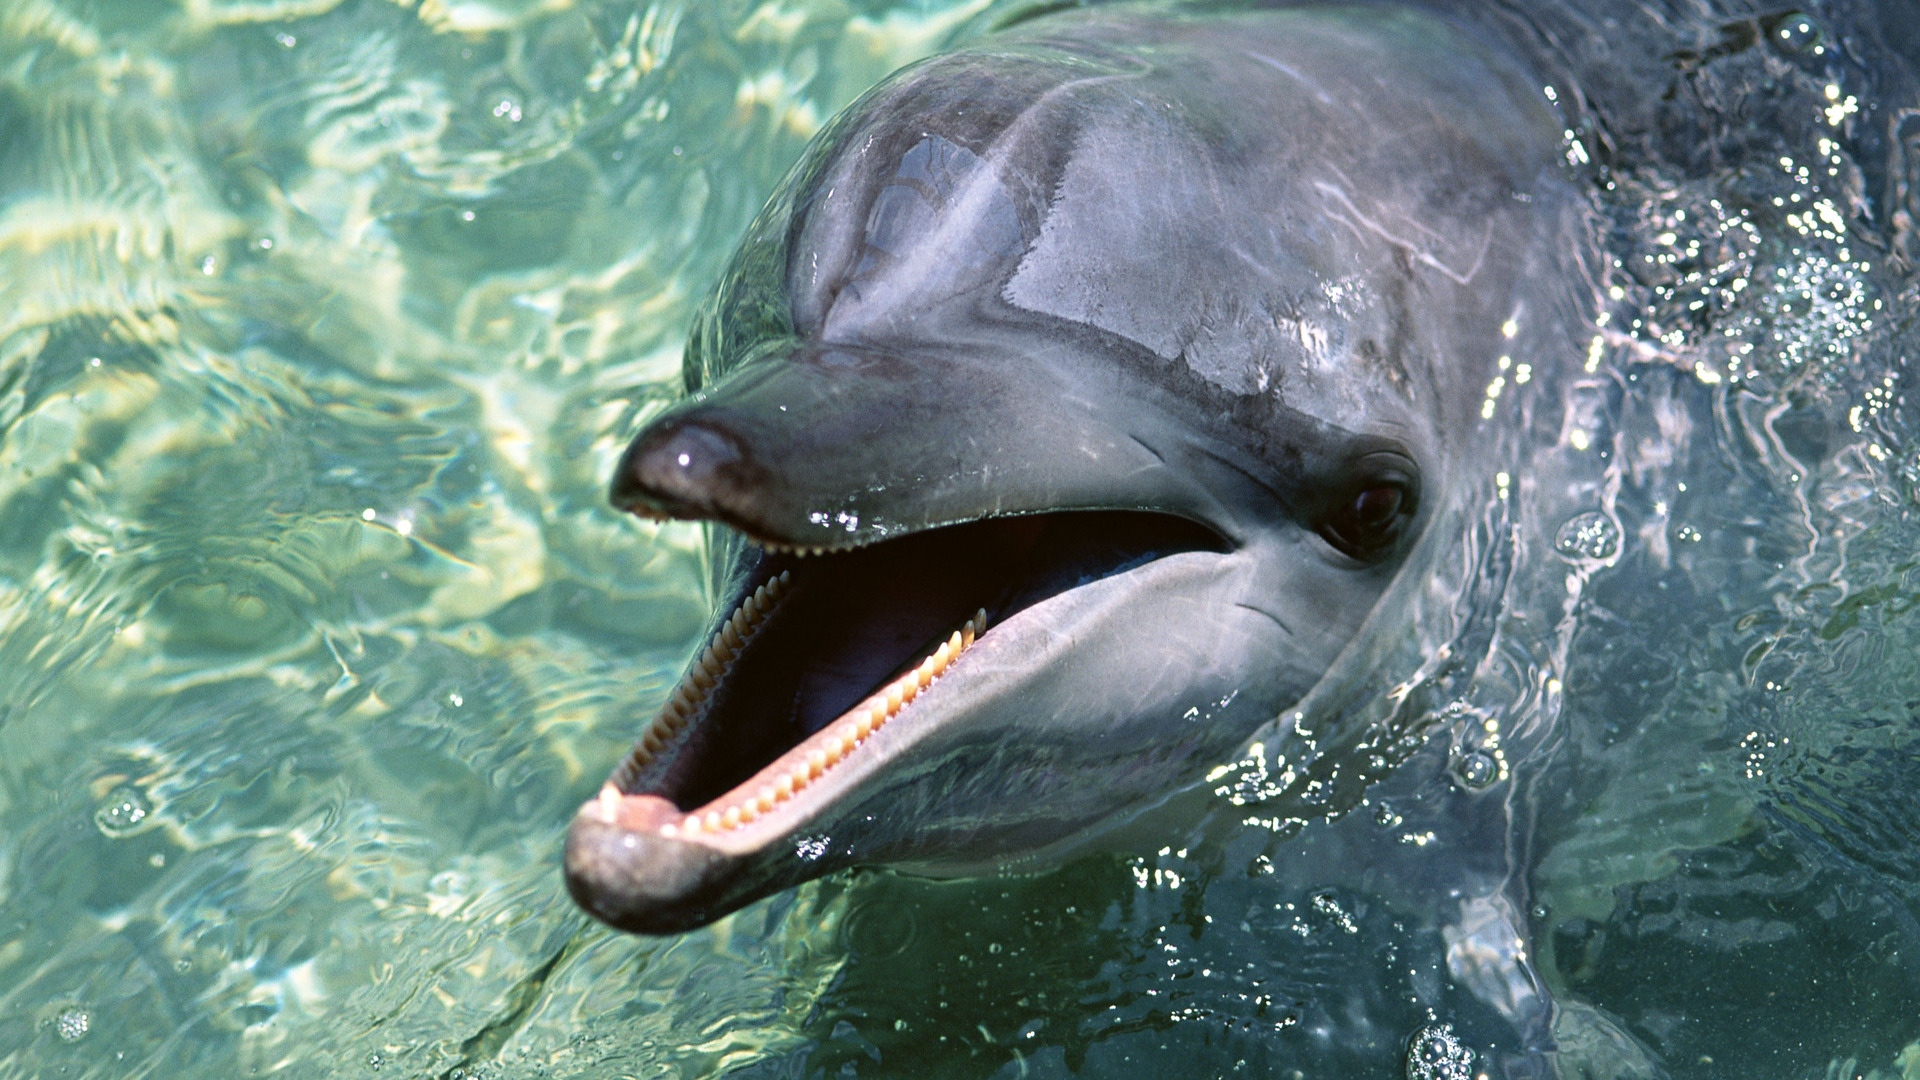 fondos de pantalla,delfín nariz de botella común,delfín nariz de botella,delfín,mamífero marino,delfín común de pico corto